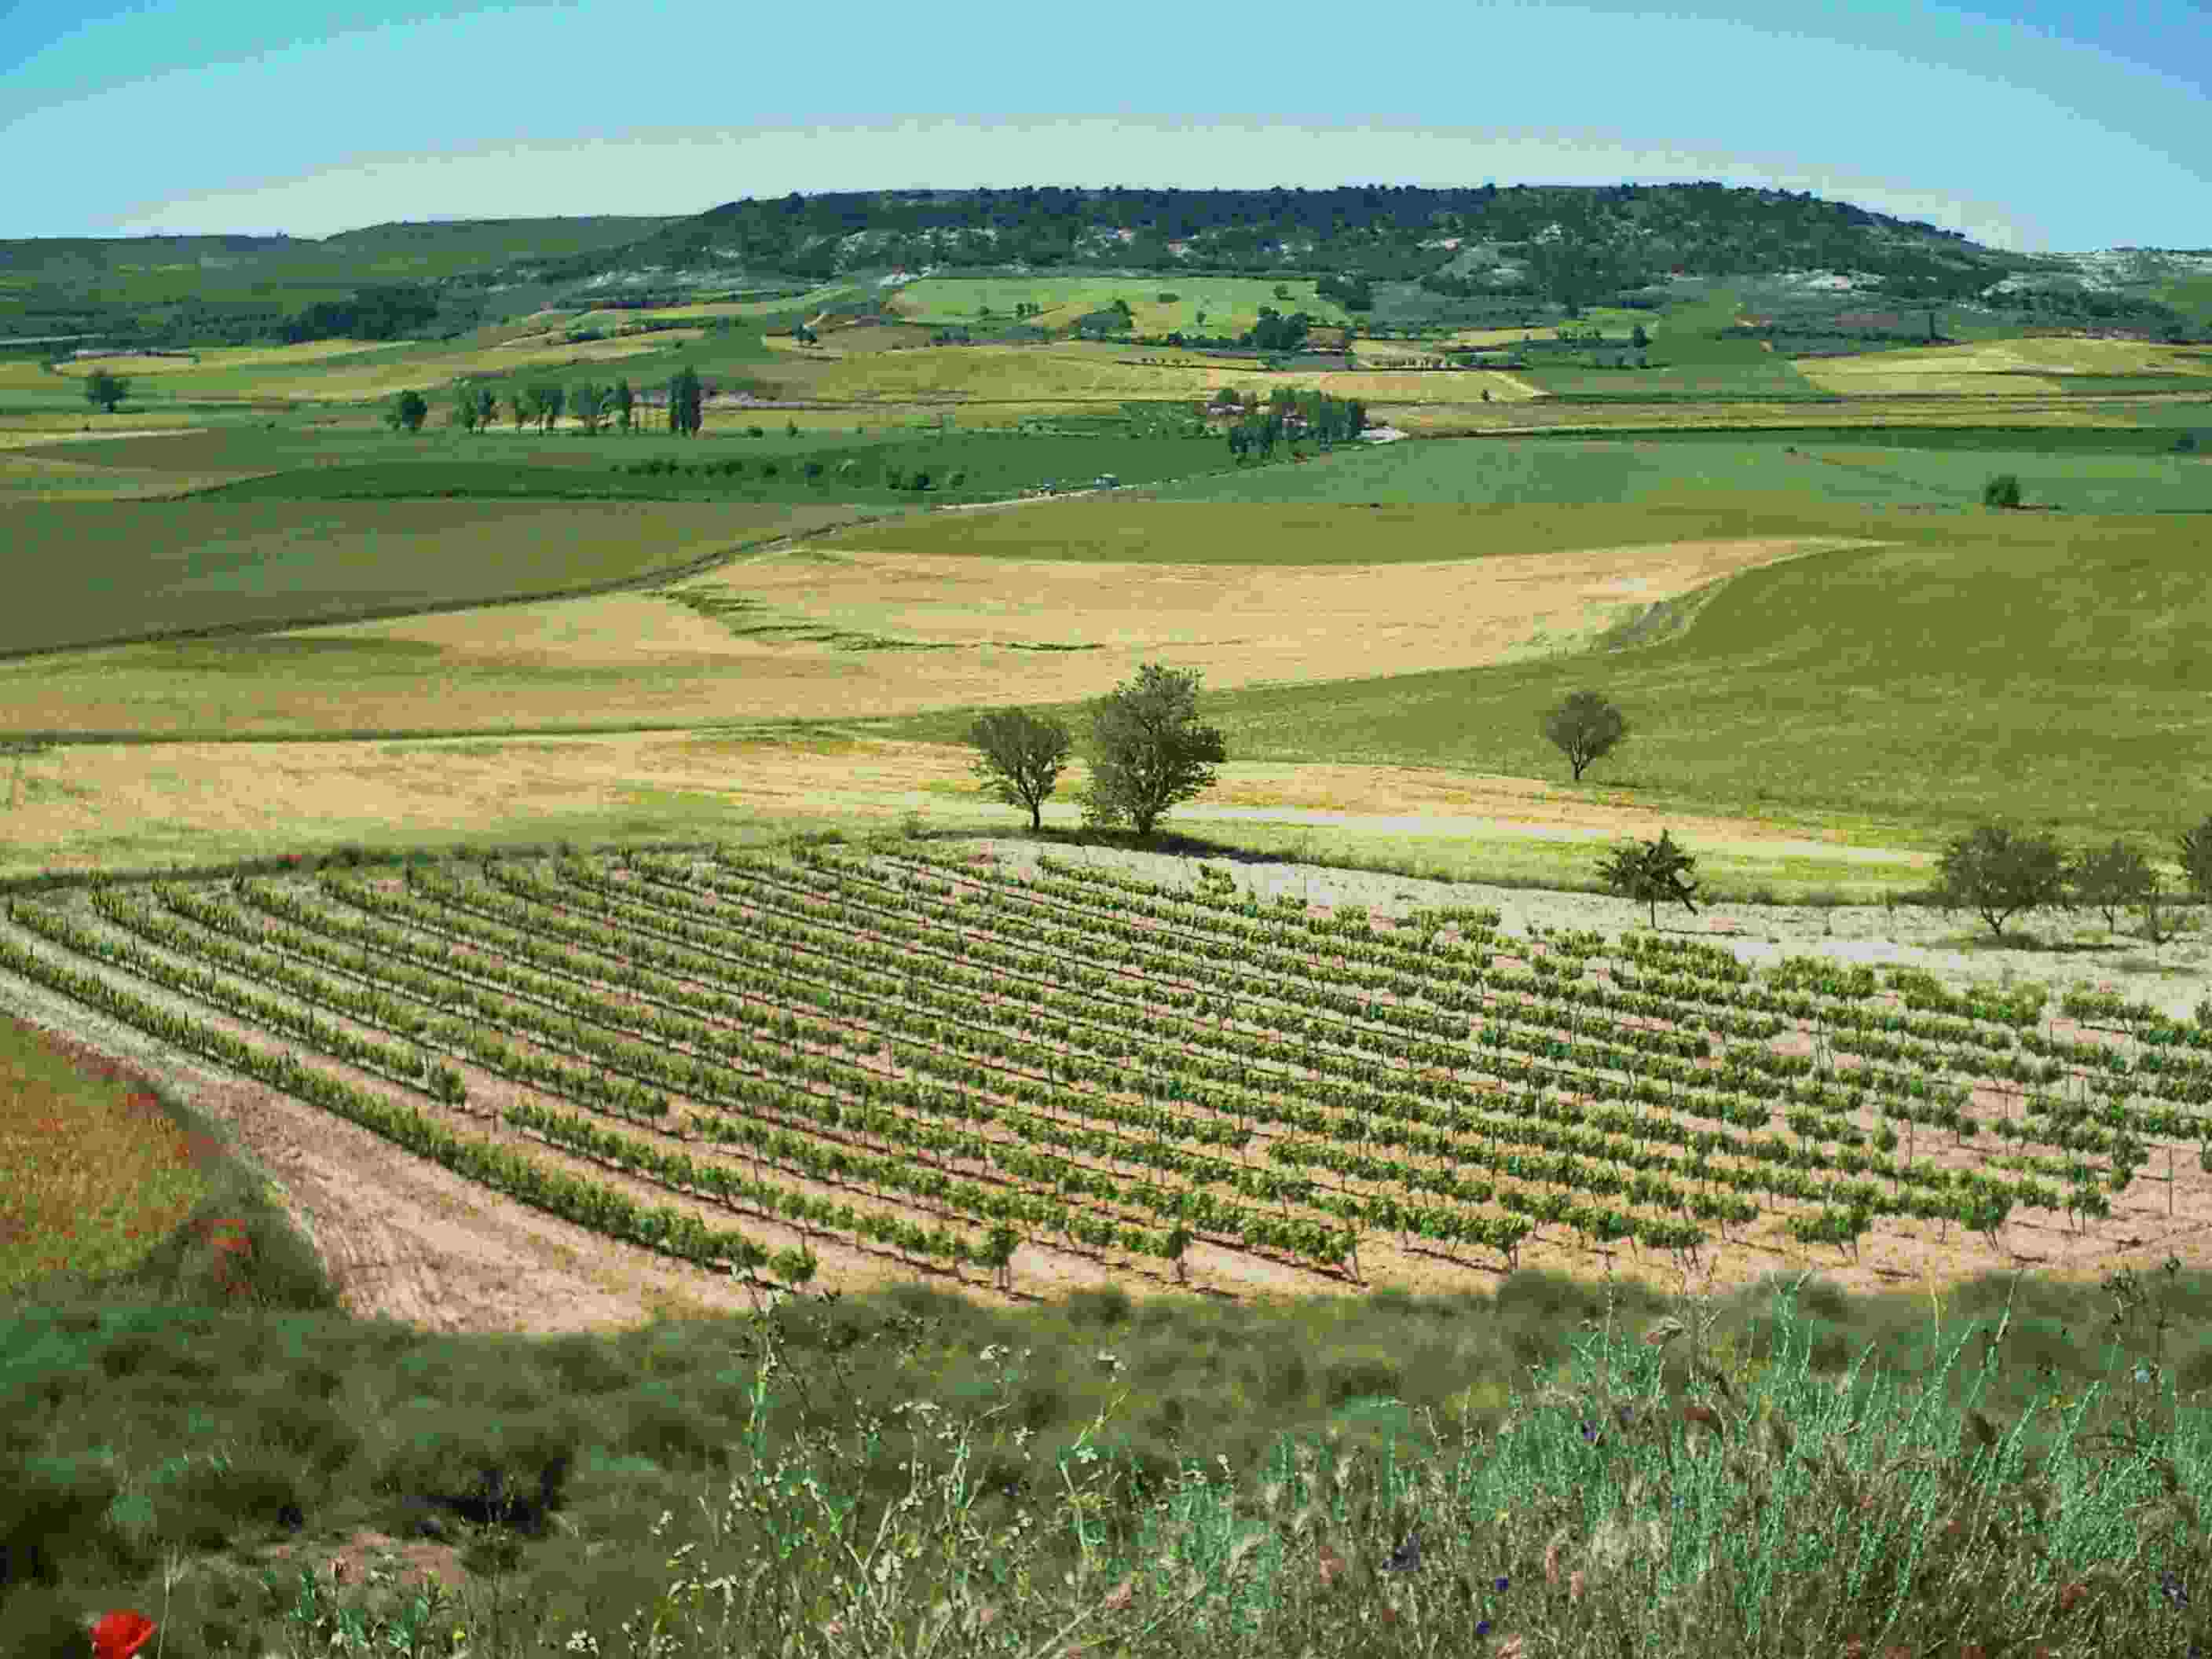 Los espectaculares viñedos escondidos en España que debes descubrir